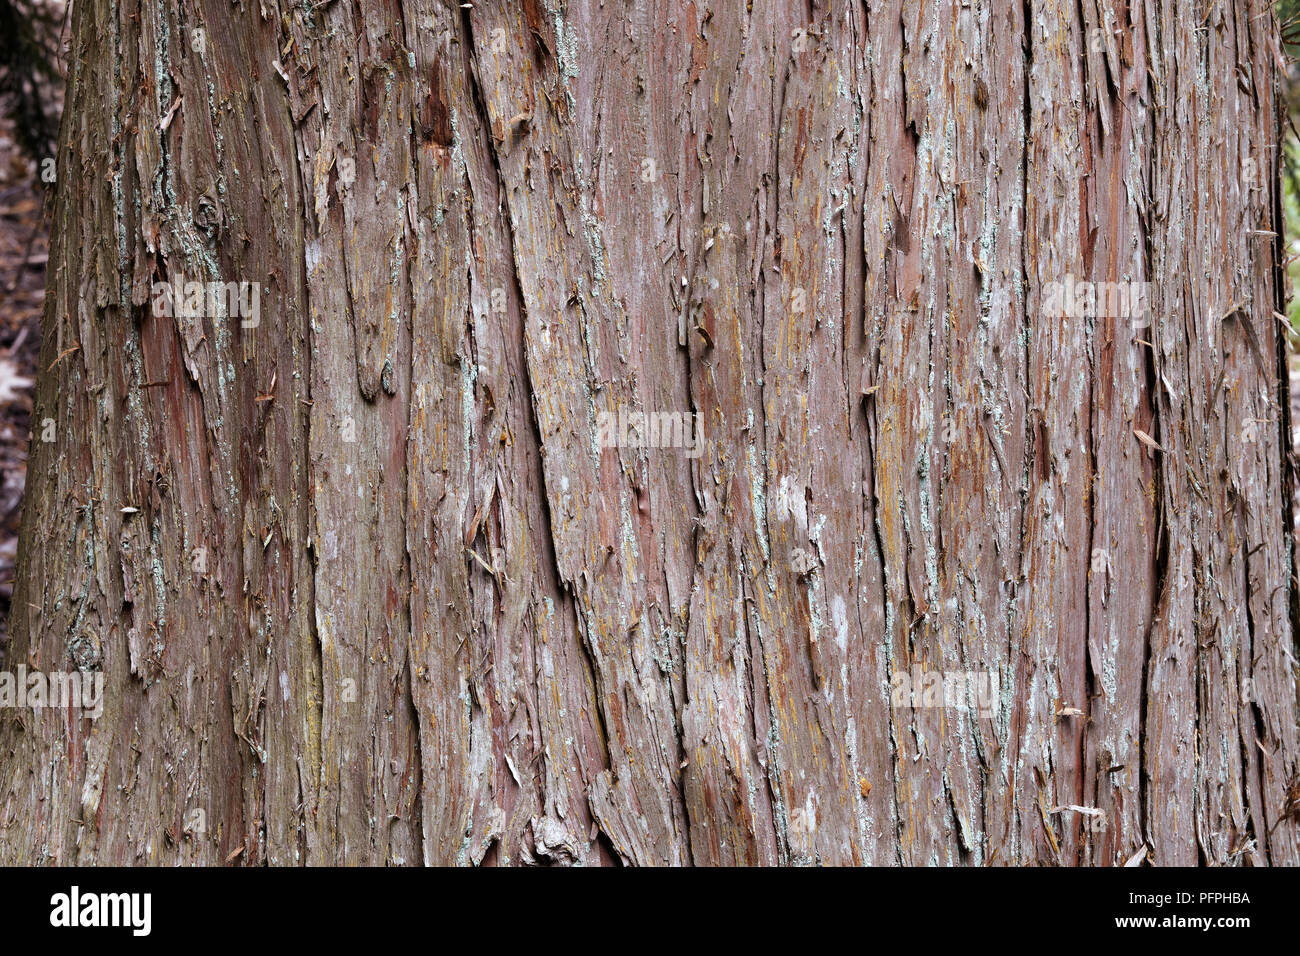 Chamaecyparis nootkatensis, syn Callitropsis nootkatensis (Nootka cypress), close-up on bark Stock Photo